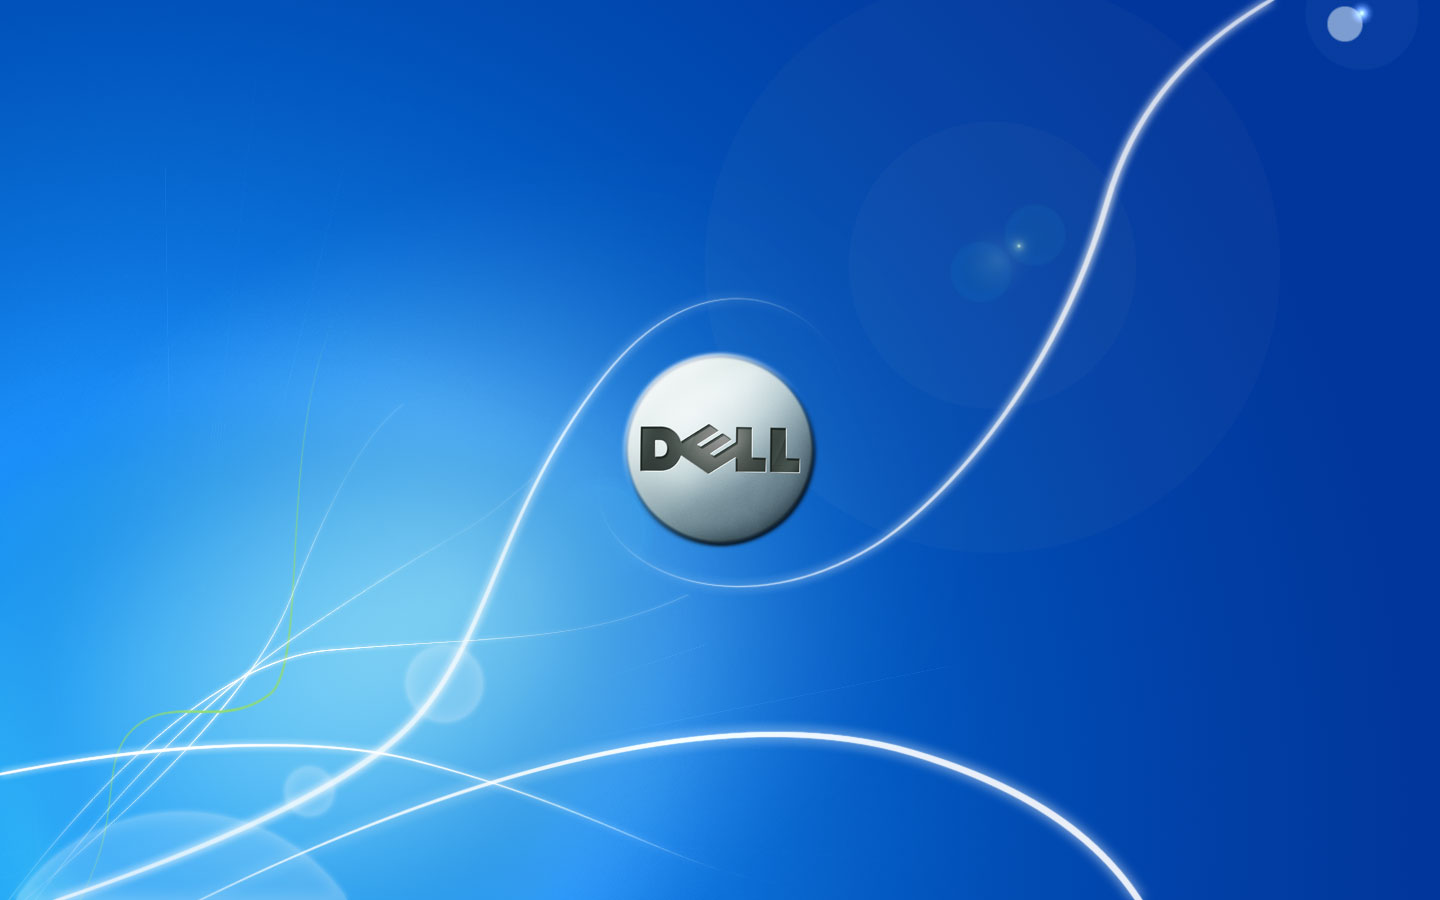 Dell Wallpaper Background